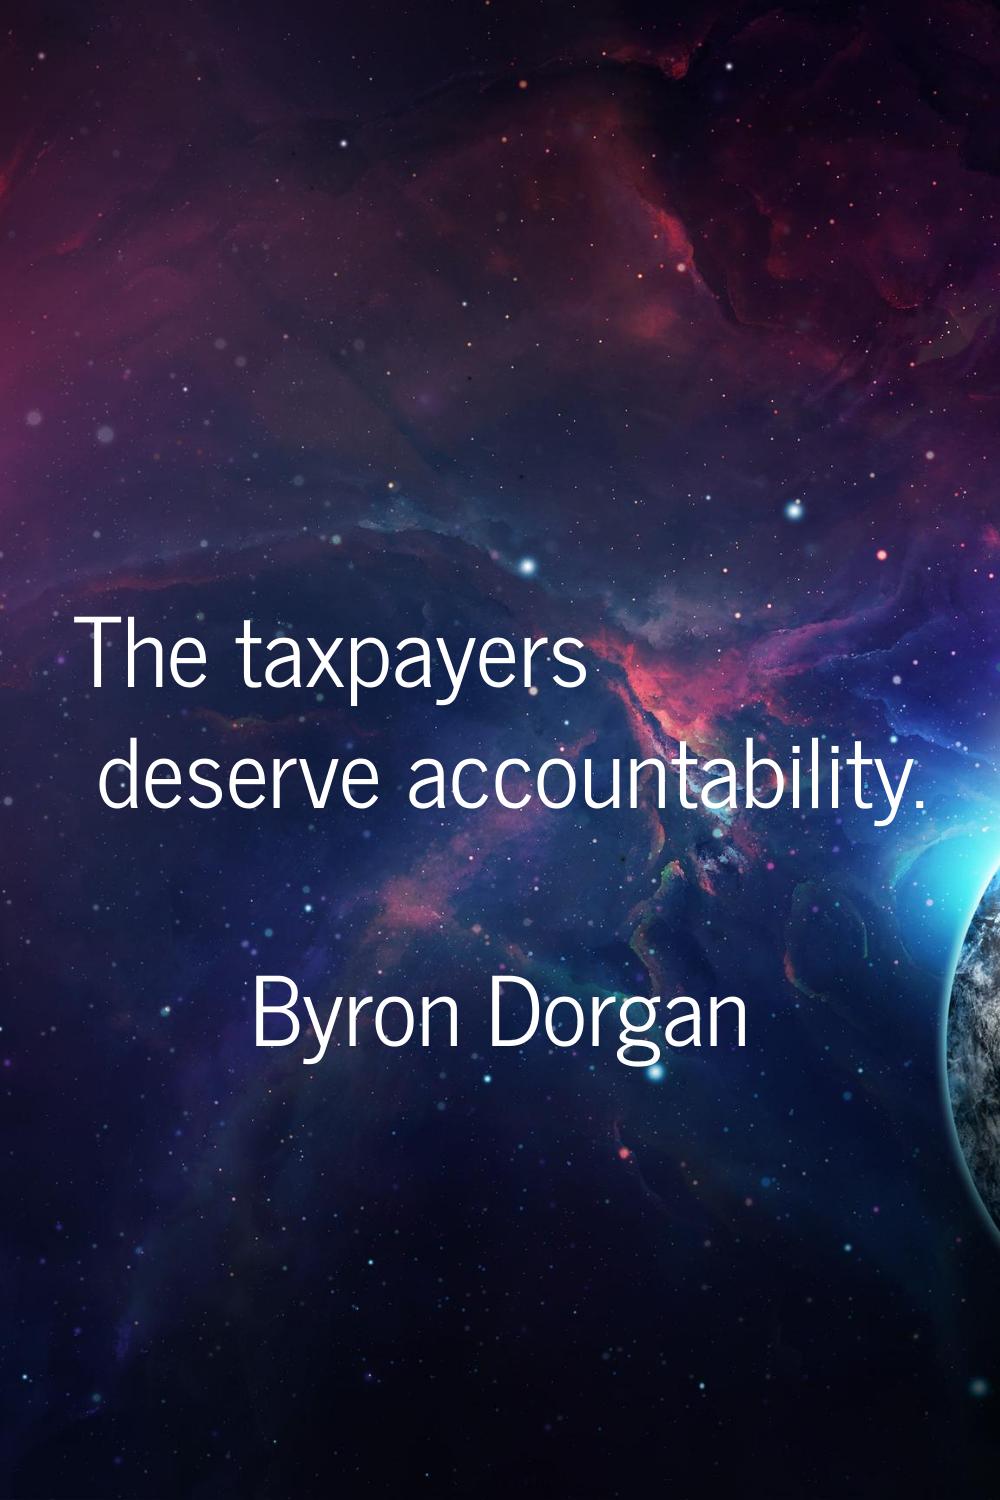 The taxpayers deserve accountability.